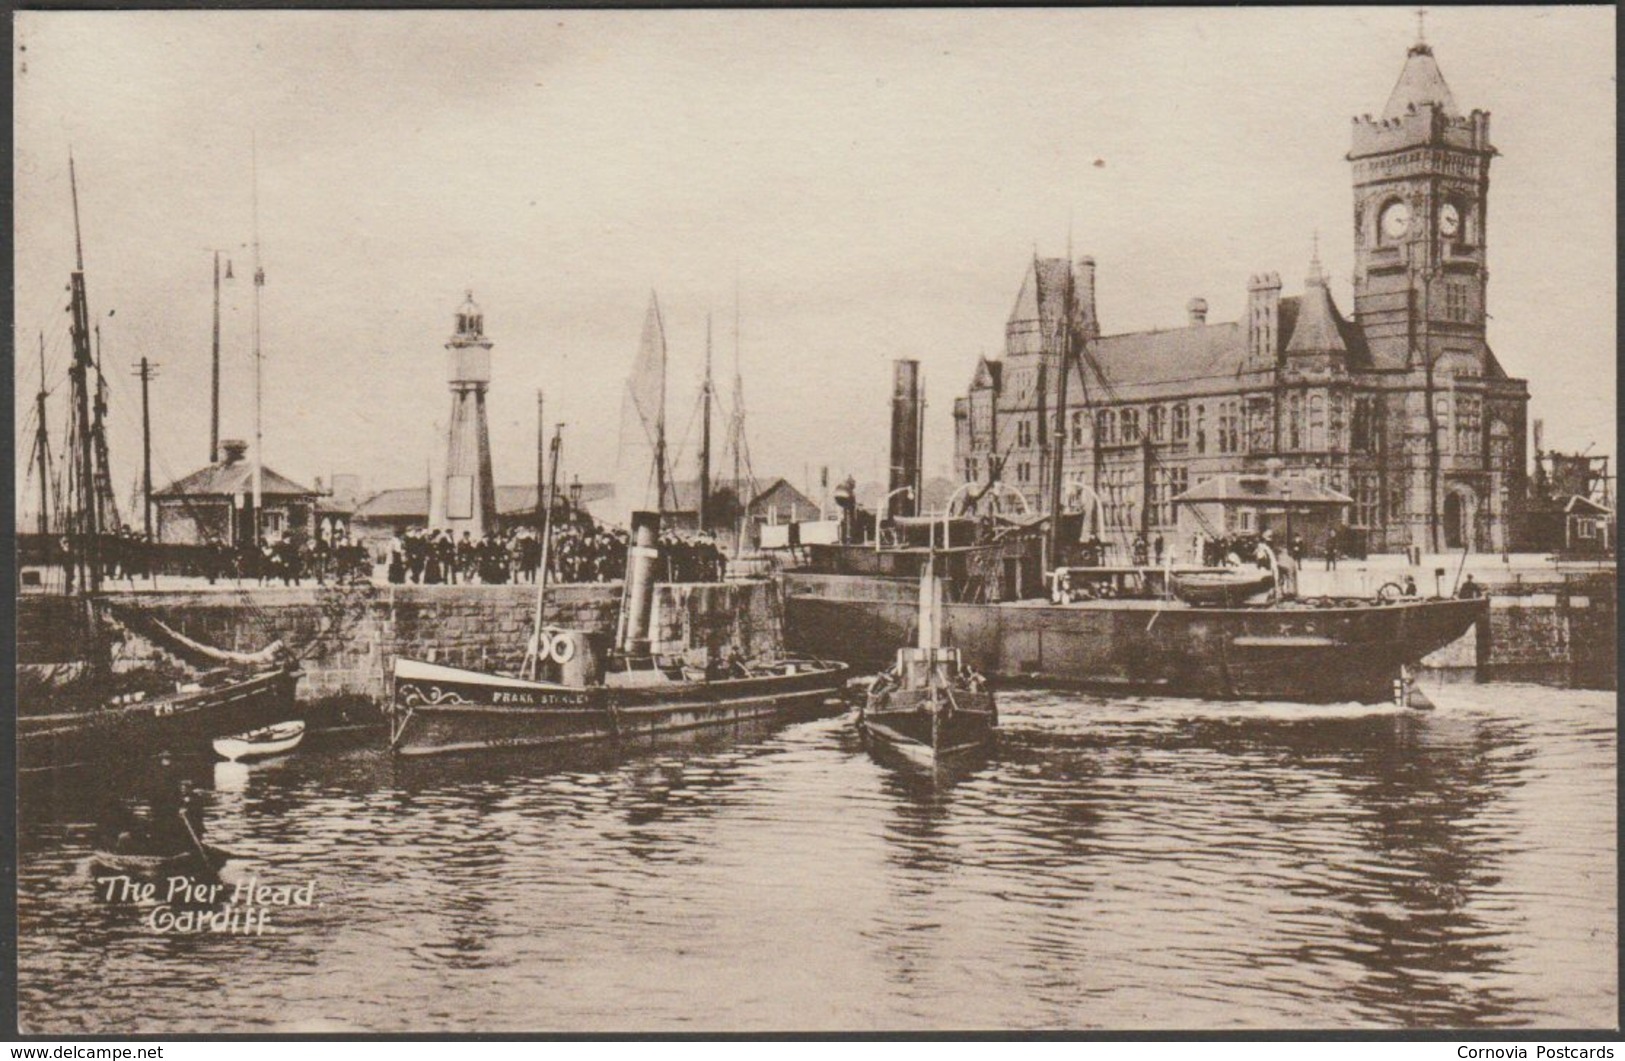 The Pier Head, Cardiff, Glamorgan, 1917 - Philco Postcard - Glamorgan